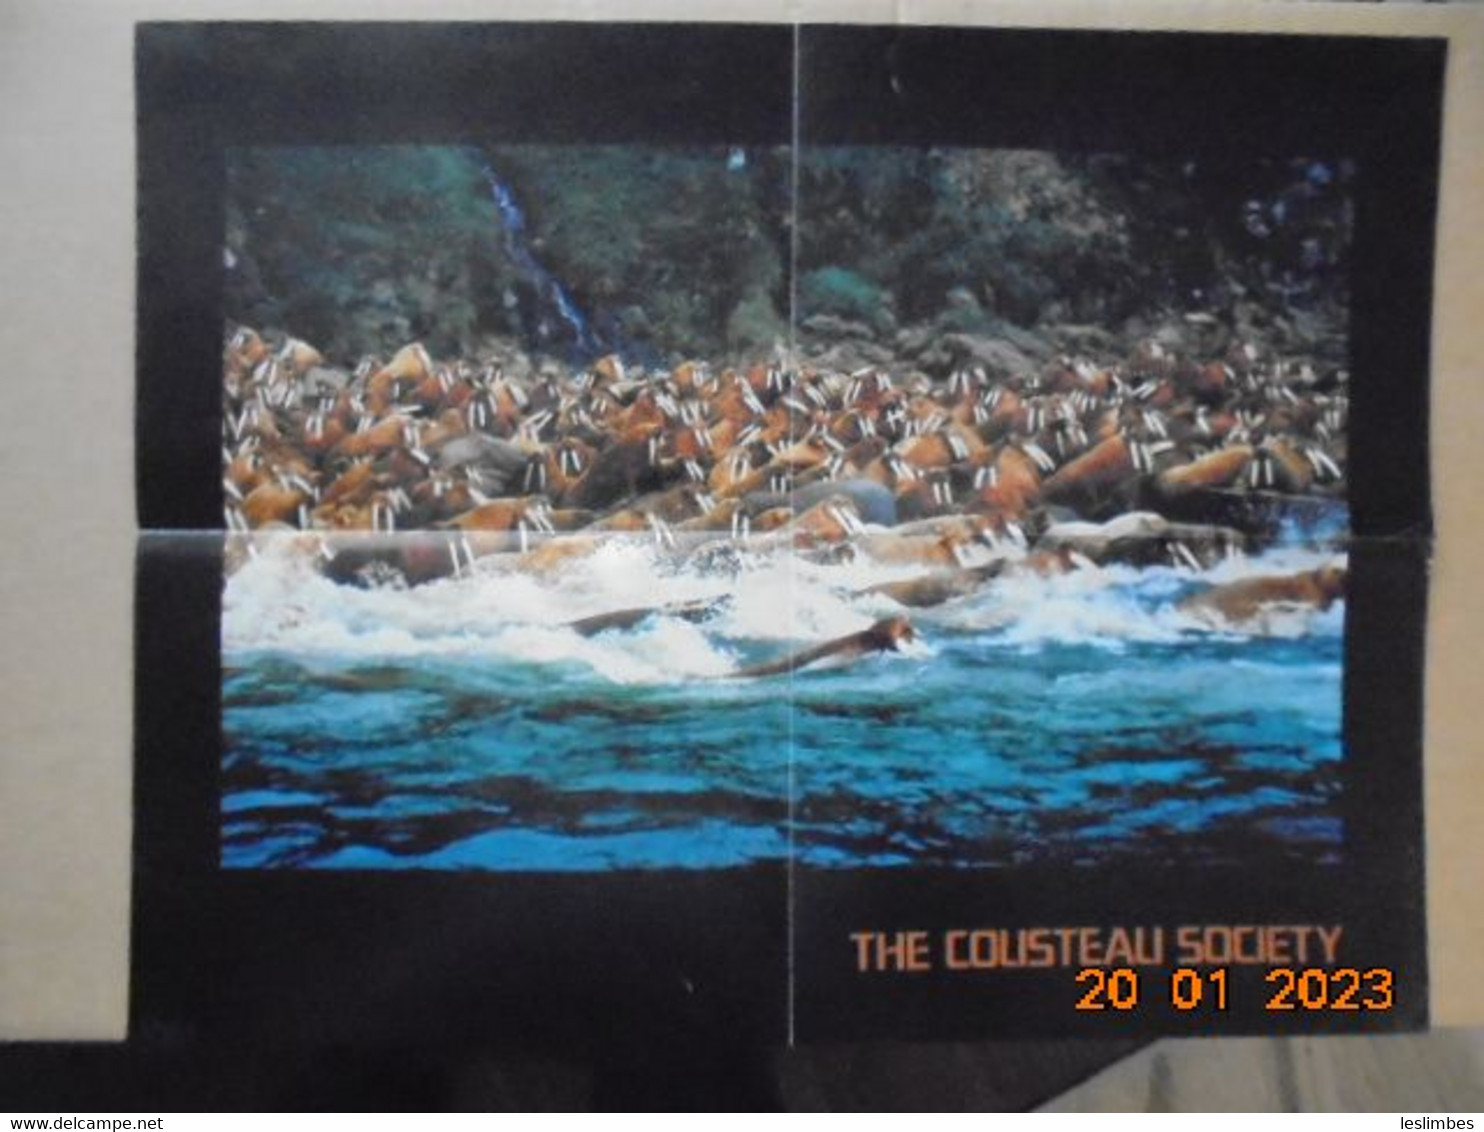 Cousteau Society Bulletin Et Affiche En Anglais : Calypso Log, Volume 3, Number 6 (November - December 1976) - Nautra